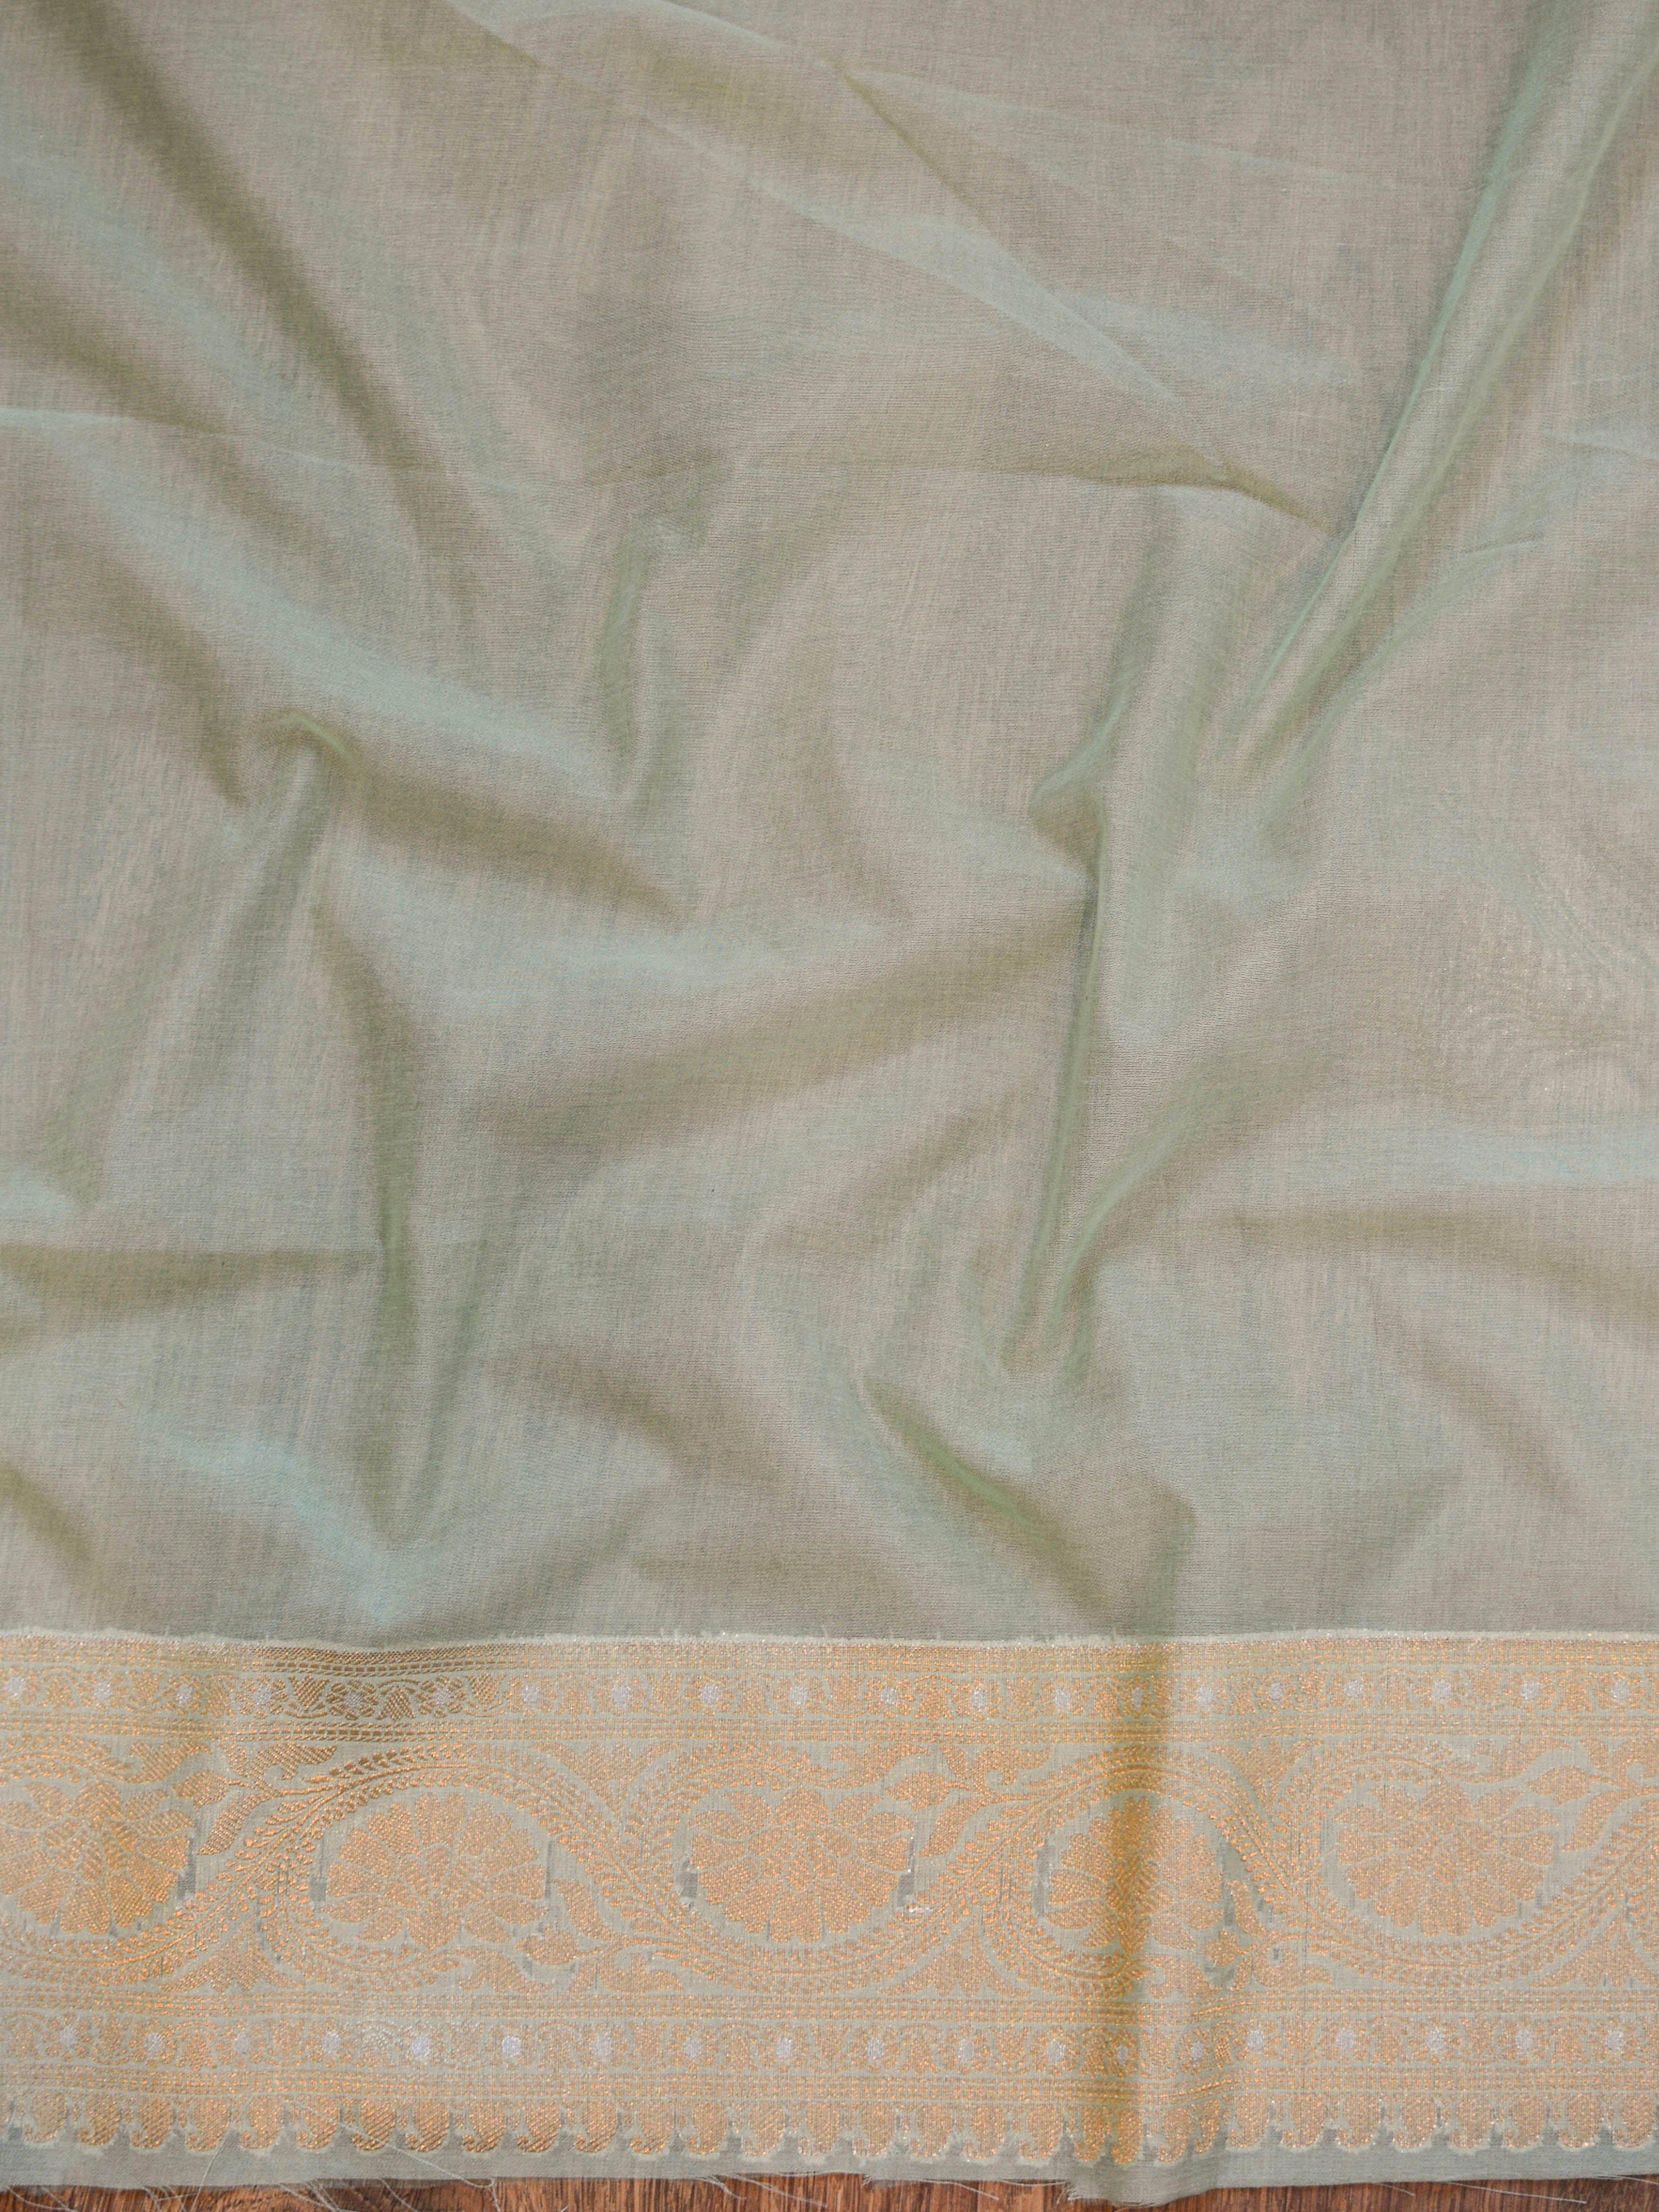 Banarasee Handwoven Semi-Chiffon Saree With Zari Buti & Contrast Border-Violet & Green